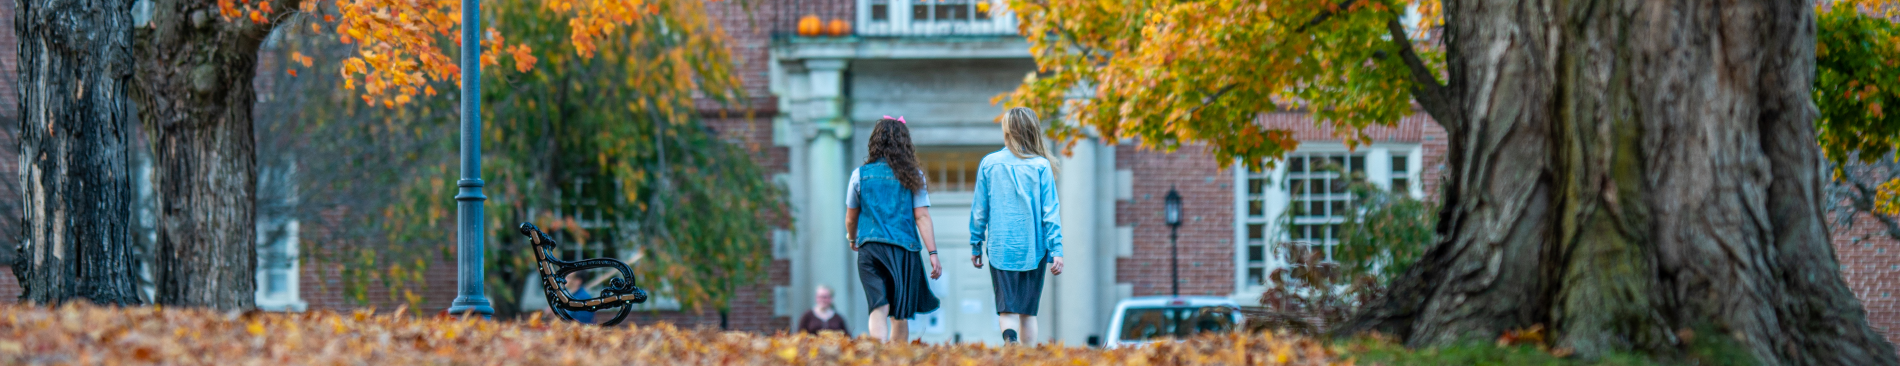 Students walk on a leafy path